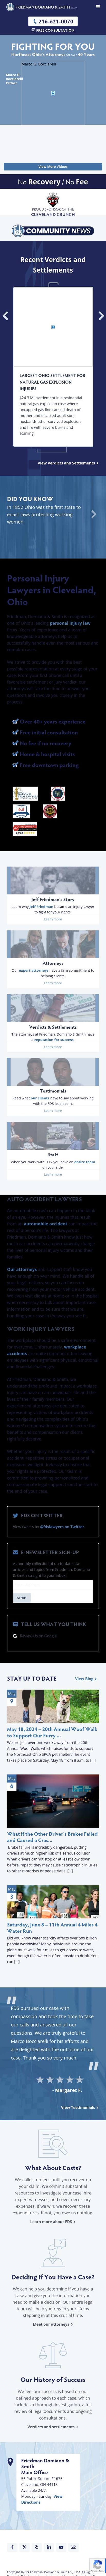 Friedman Domiano & Smith Co LPA - Cleveland OH Lawyers